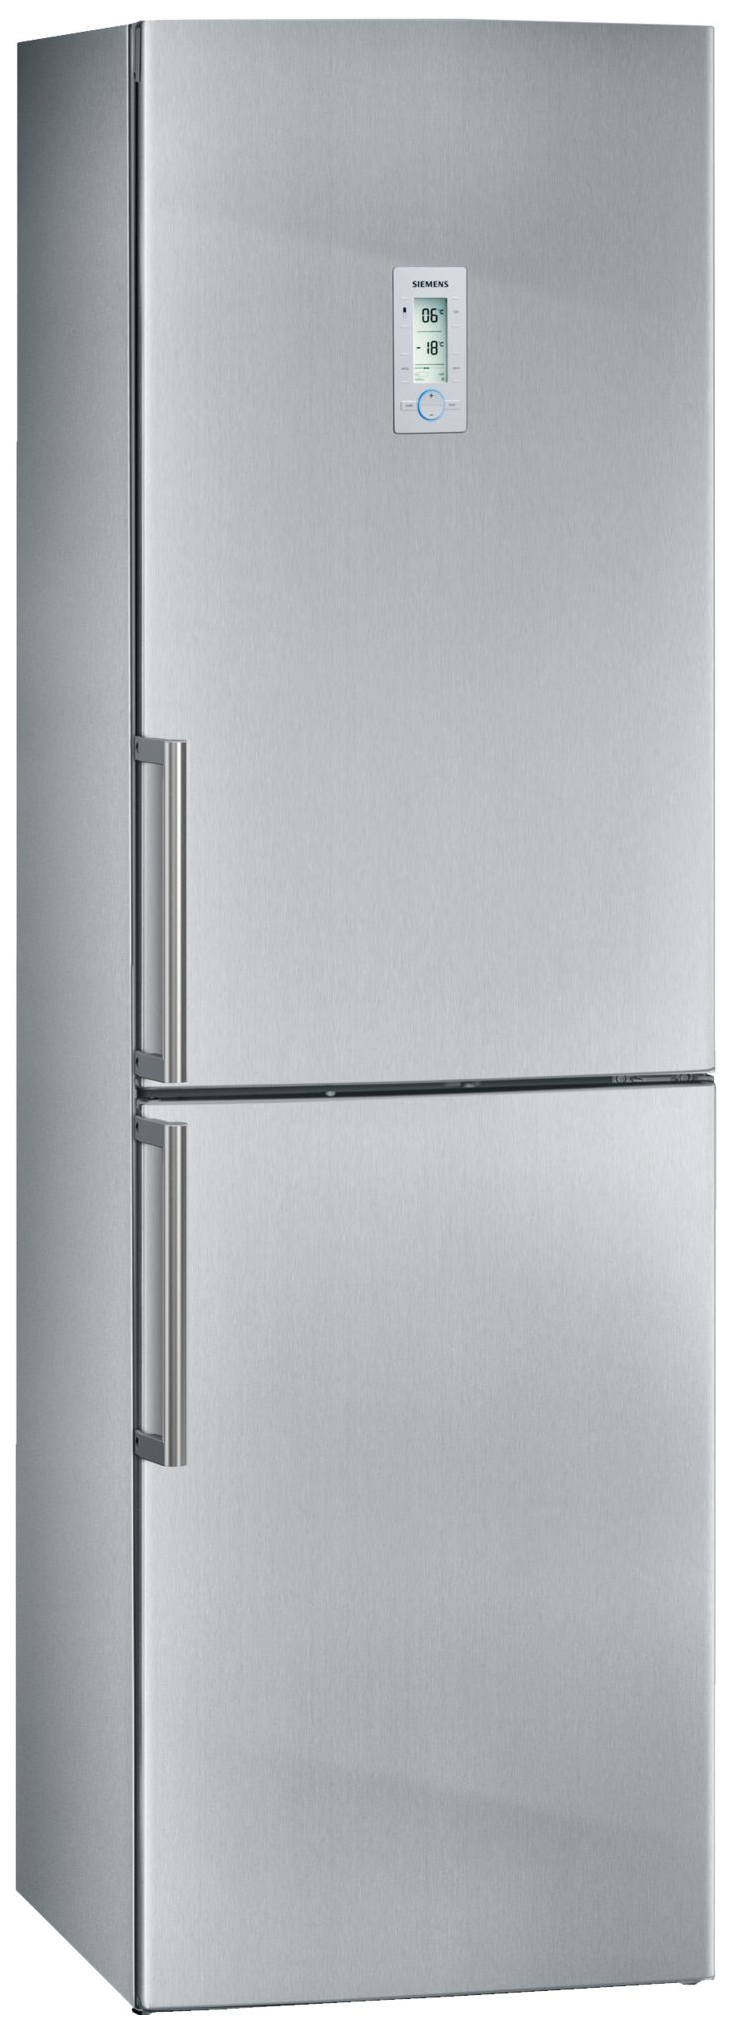 Холодильник Siemens KG39NAI26R серебристый аккумулятор для siemens gigaset e40 s30852 d1751 x1 pitatel